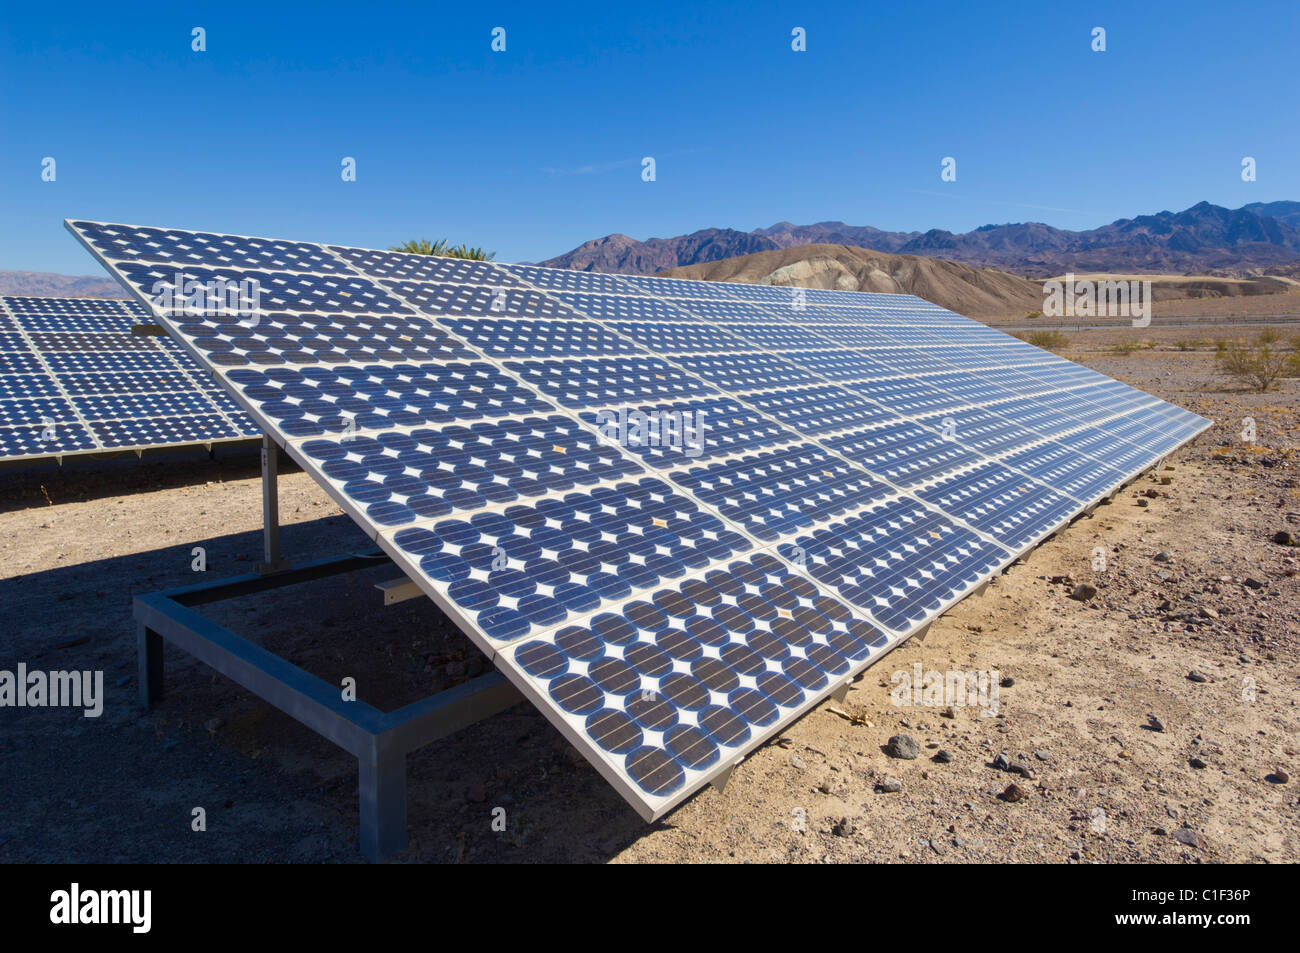 Solar panels solar panel solar photovoltaic (PV) energy system at Furnace Creek resort Death Valley National Park California usa Stock Photo